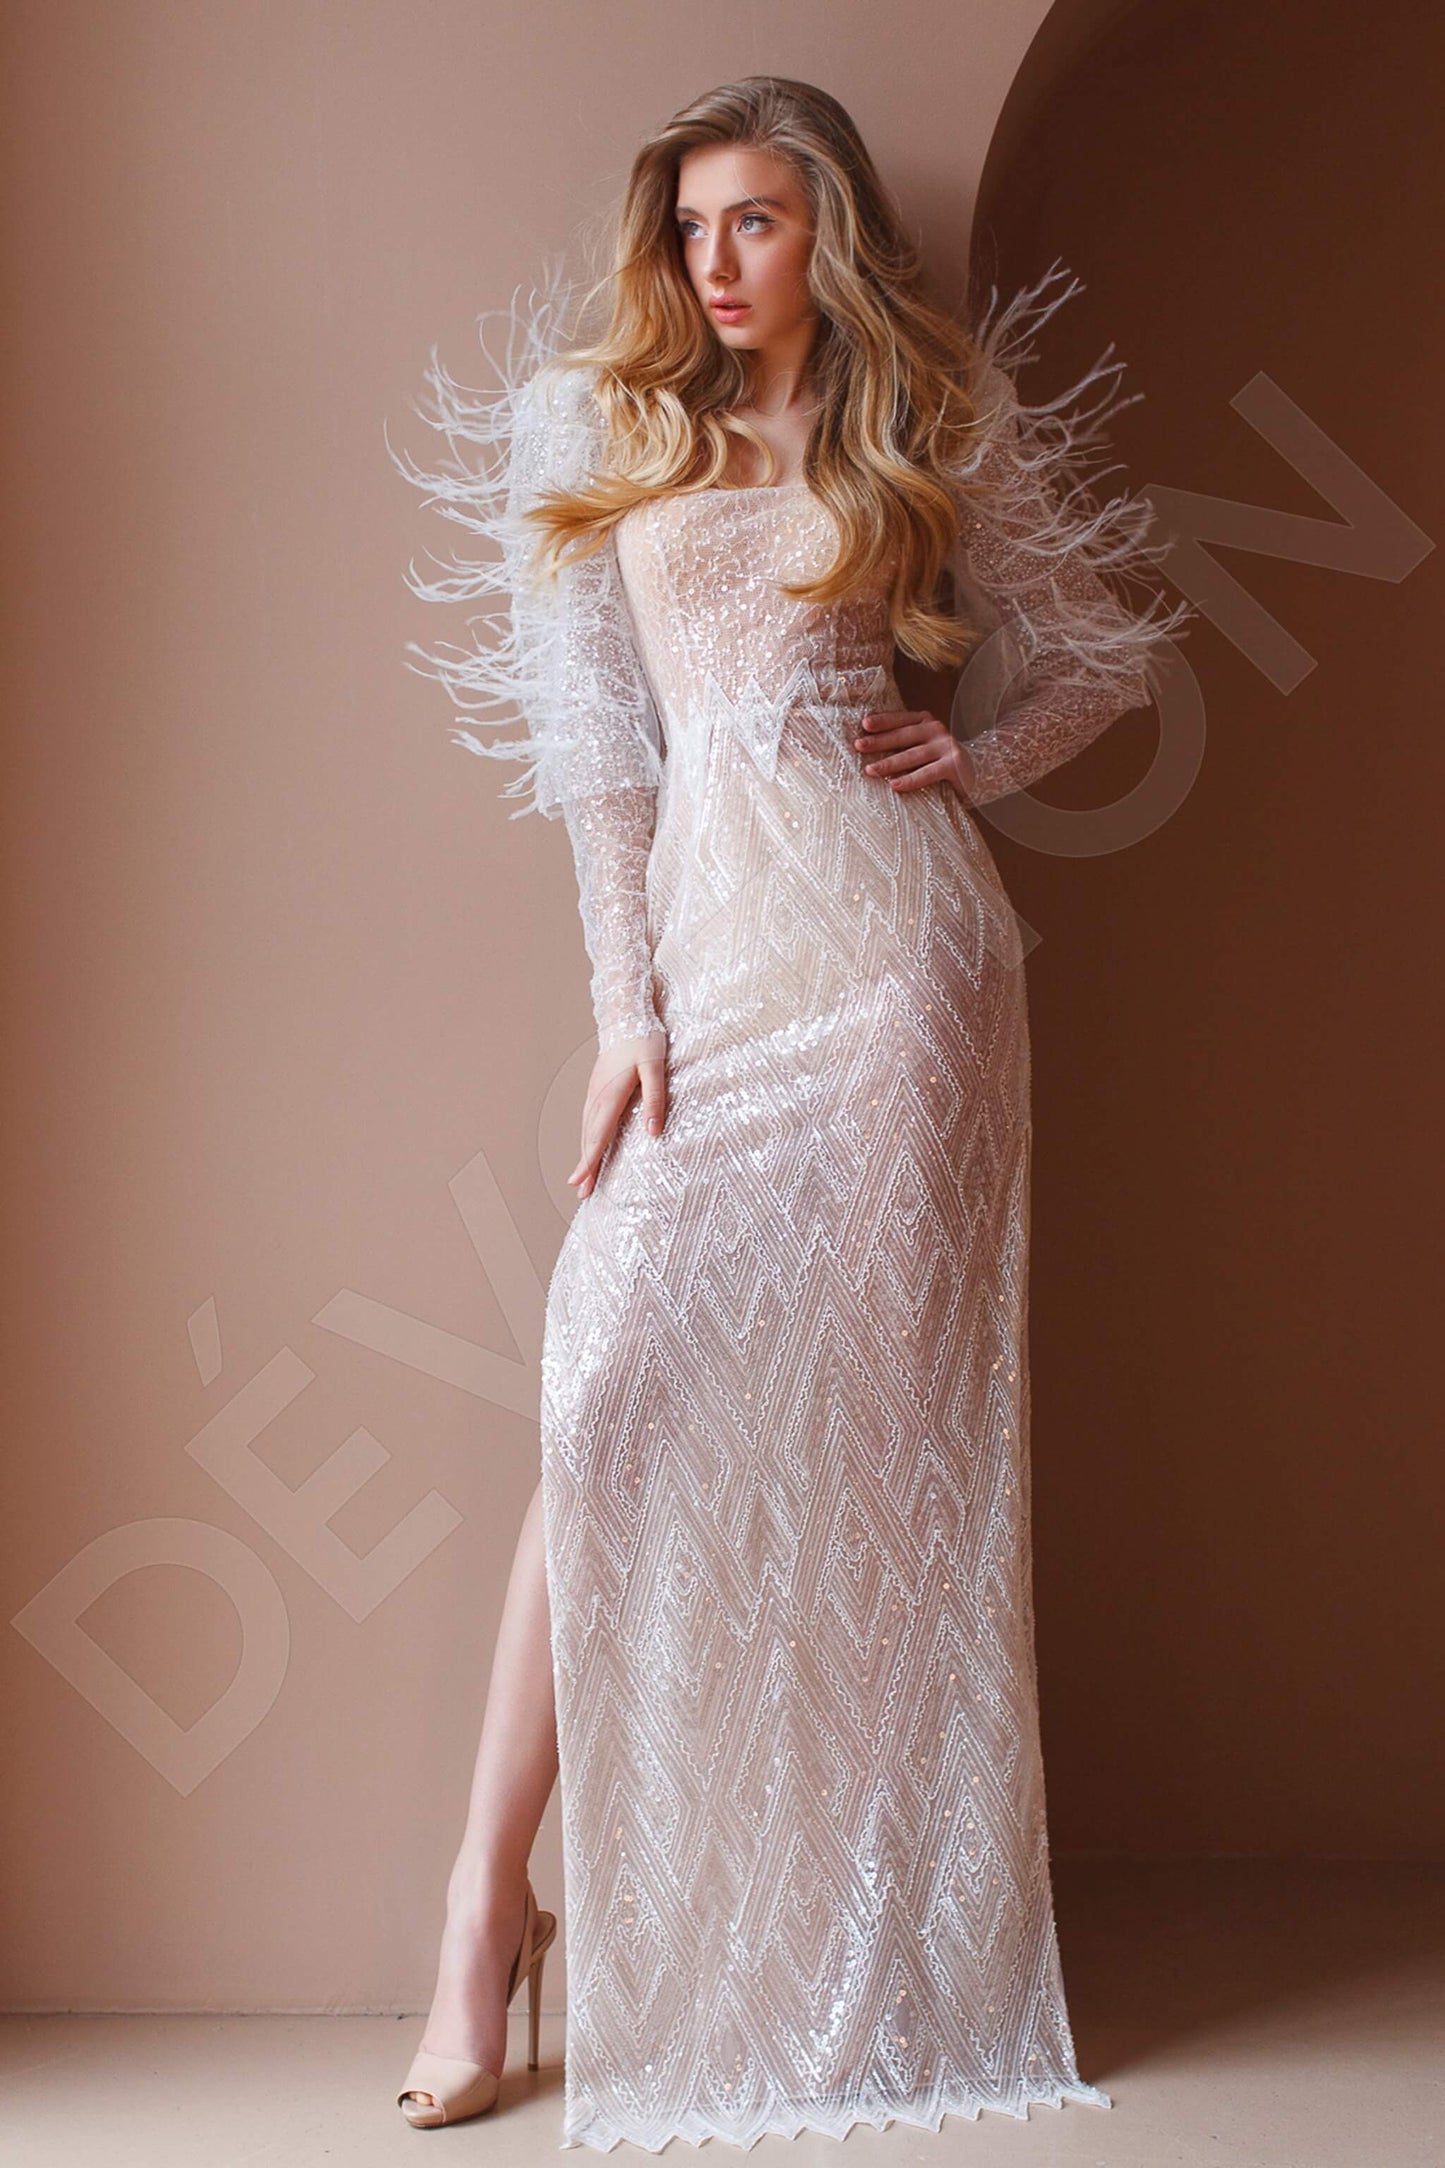 Dia Full back Sheath/Column Long sleeve Wedding Dress Front